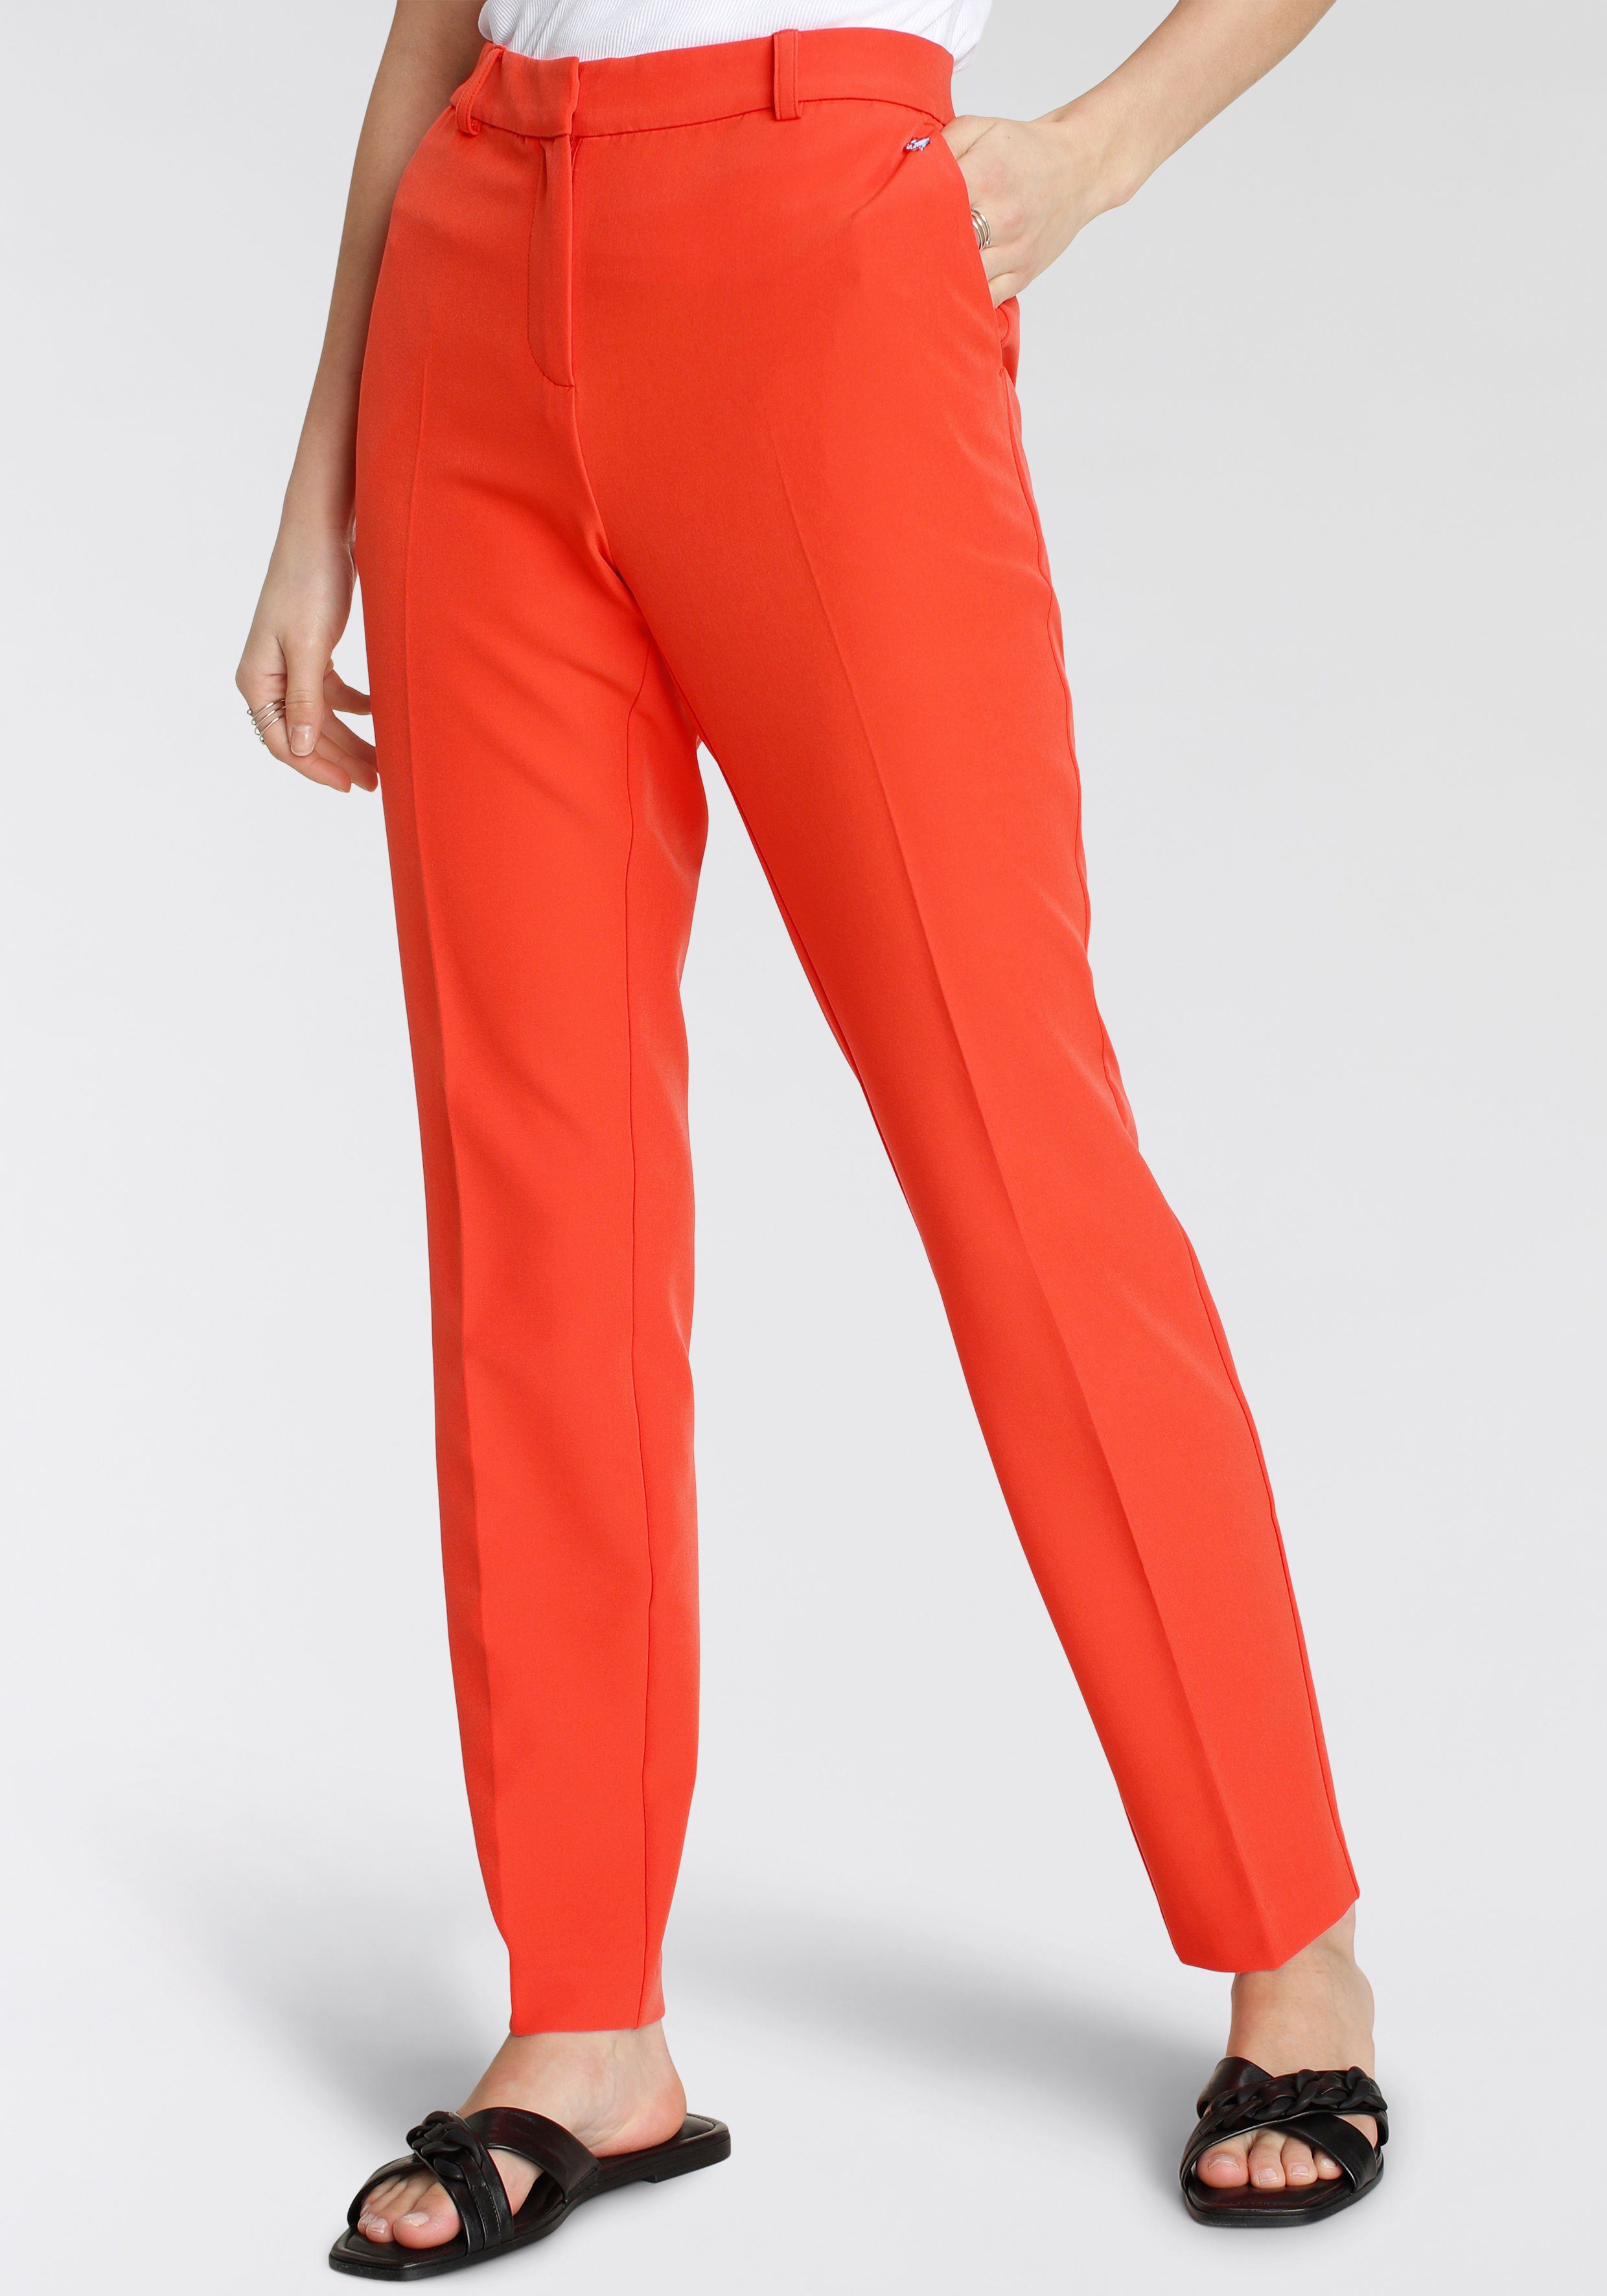 Tamaris Anzughose in (Hose Trendfarben aus nachhaltigem orange Material)